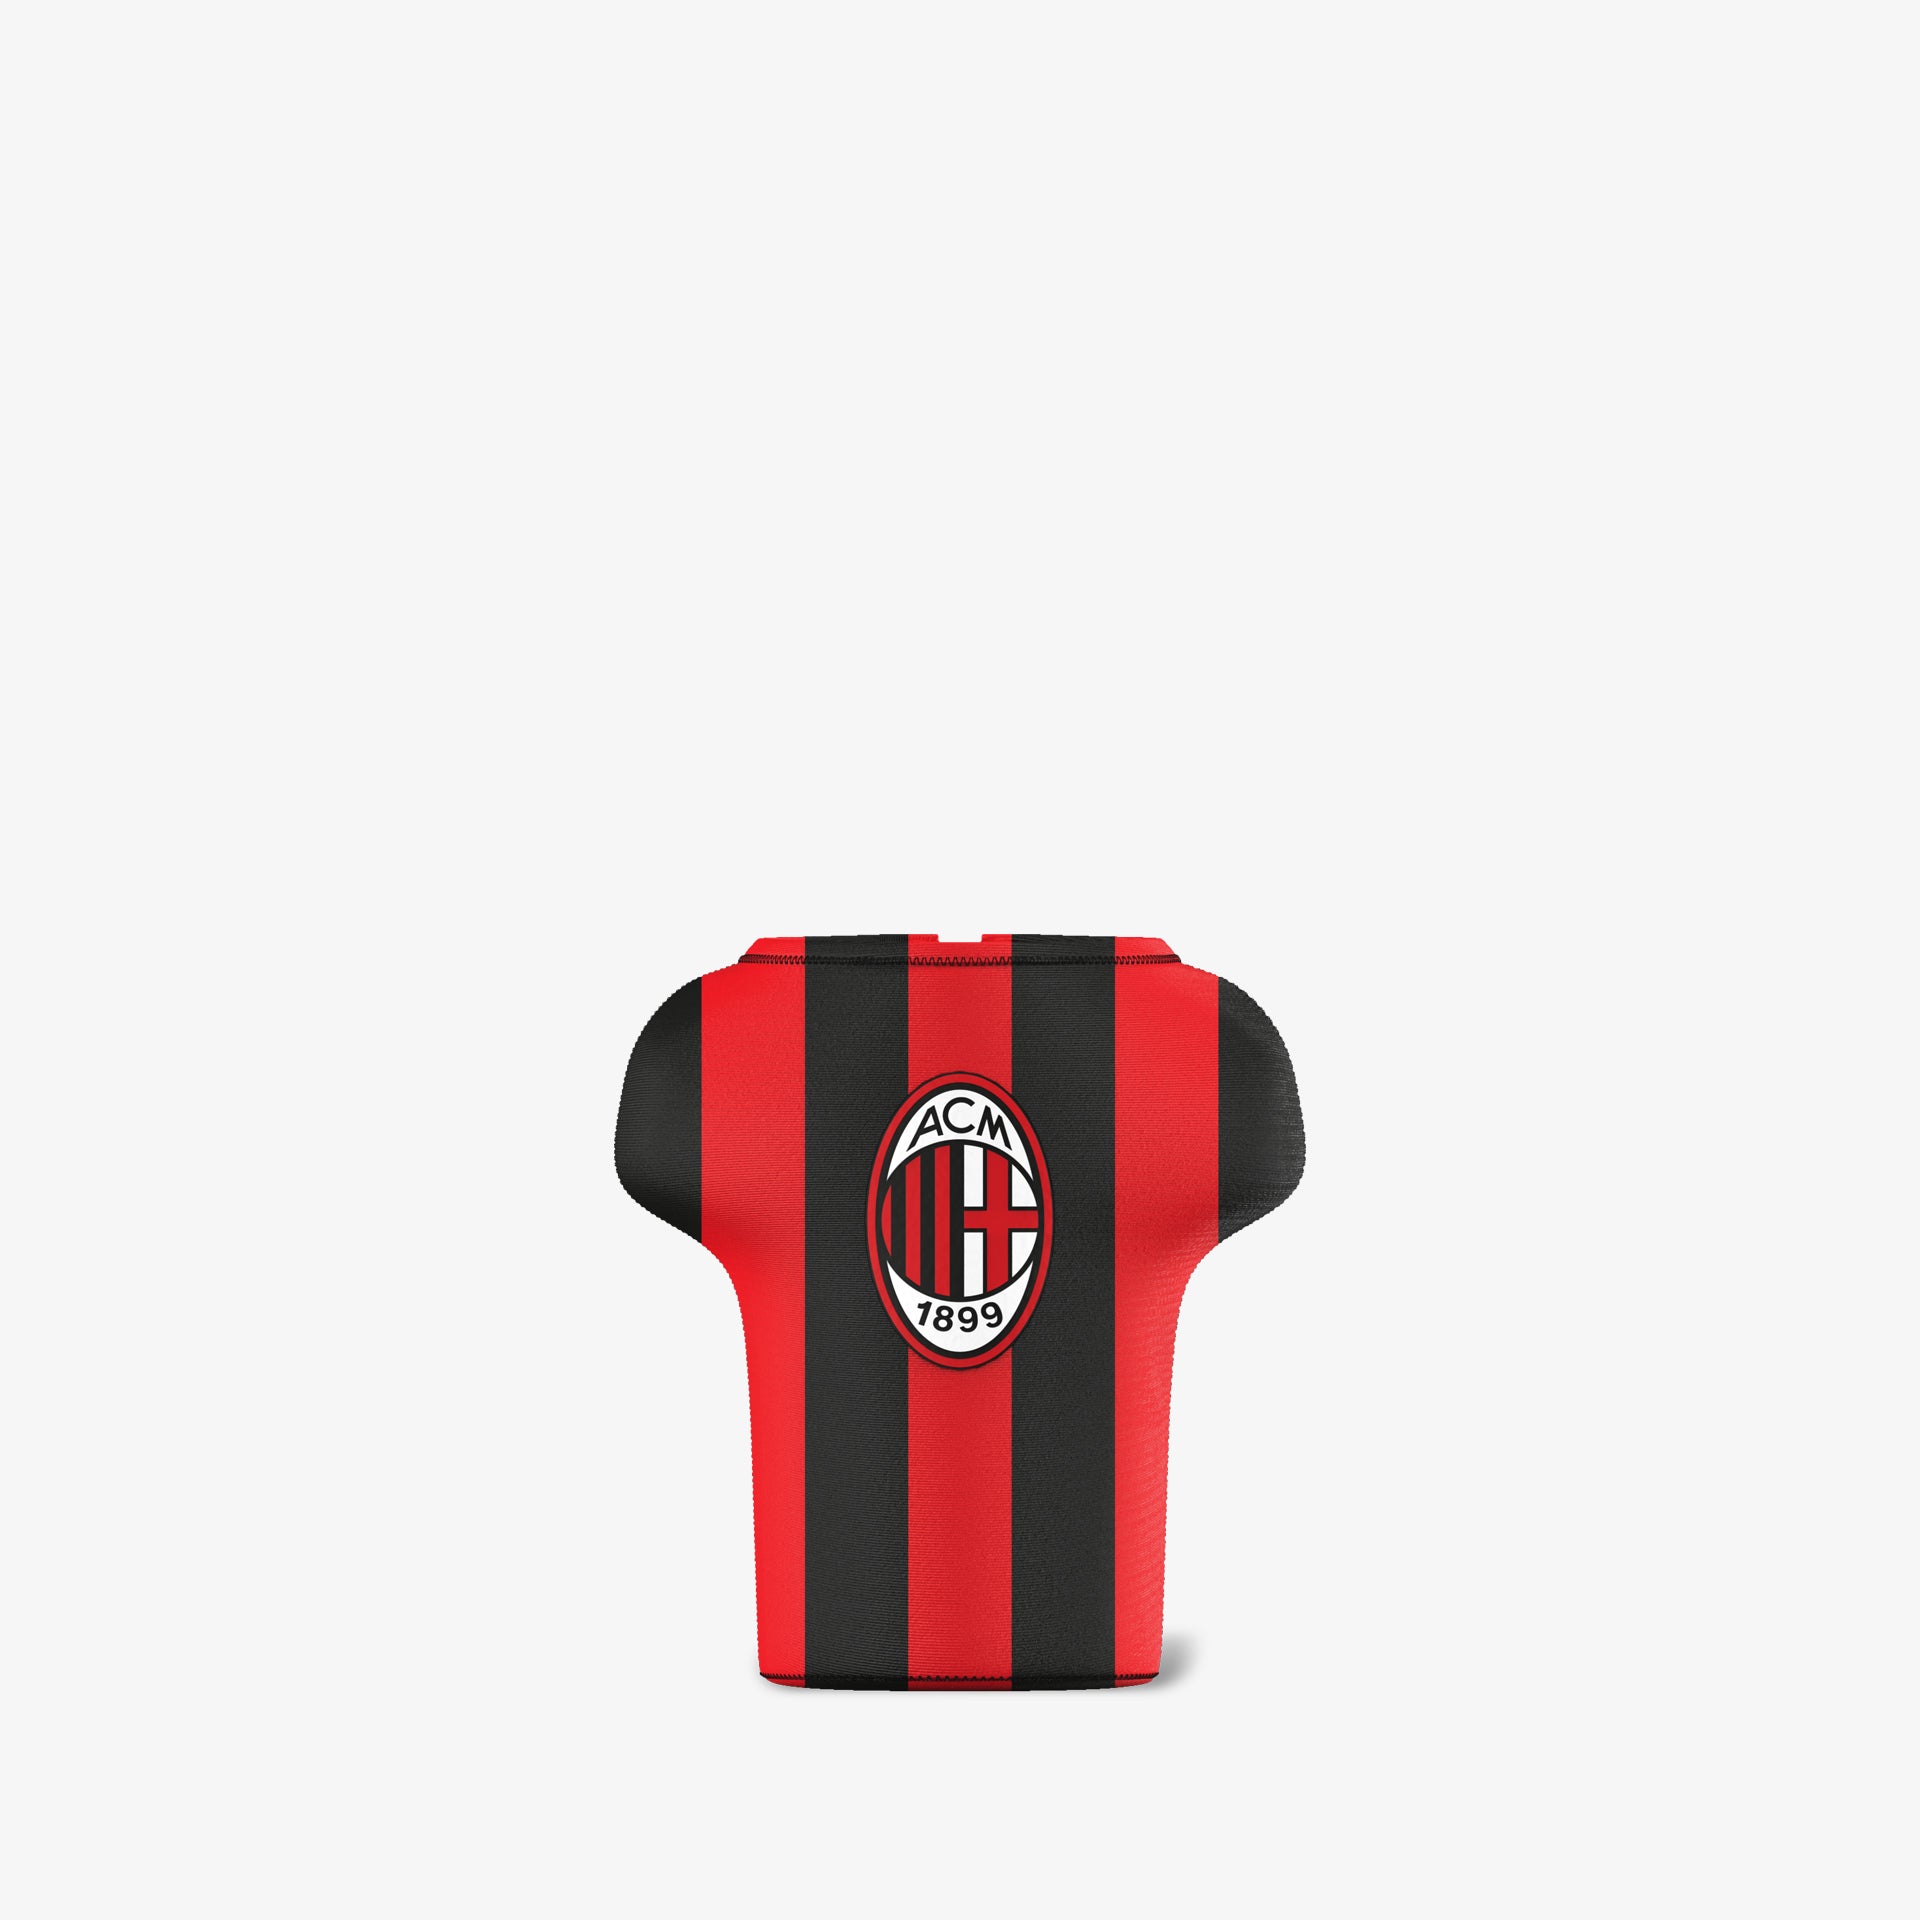 AC Milan bottle sleeve